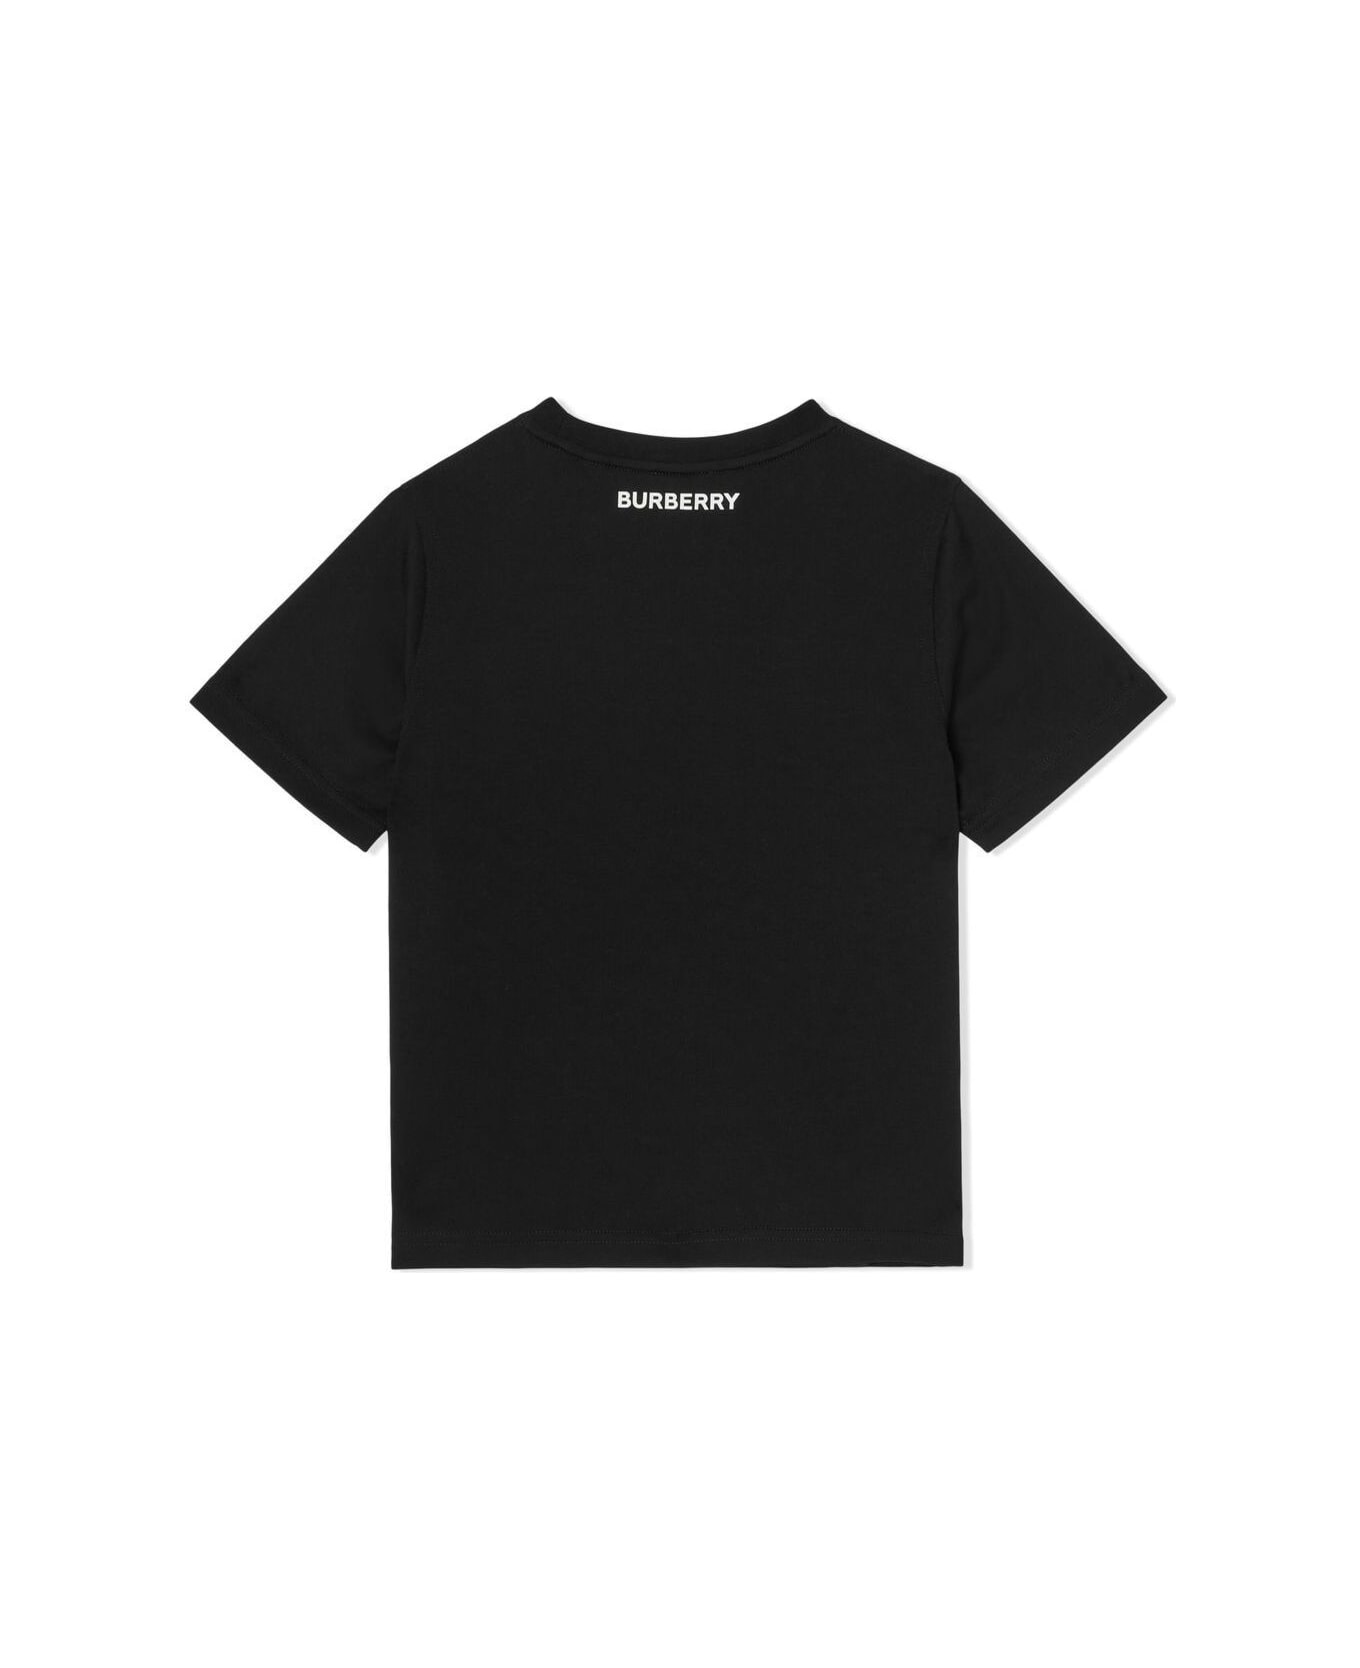 Burberry Black Crewneck T-shirt With Vintage Check Print In Cotton Boy - Black